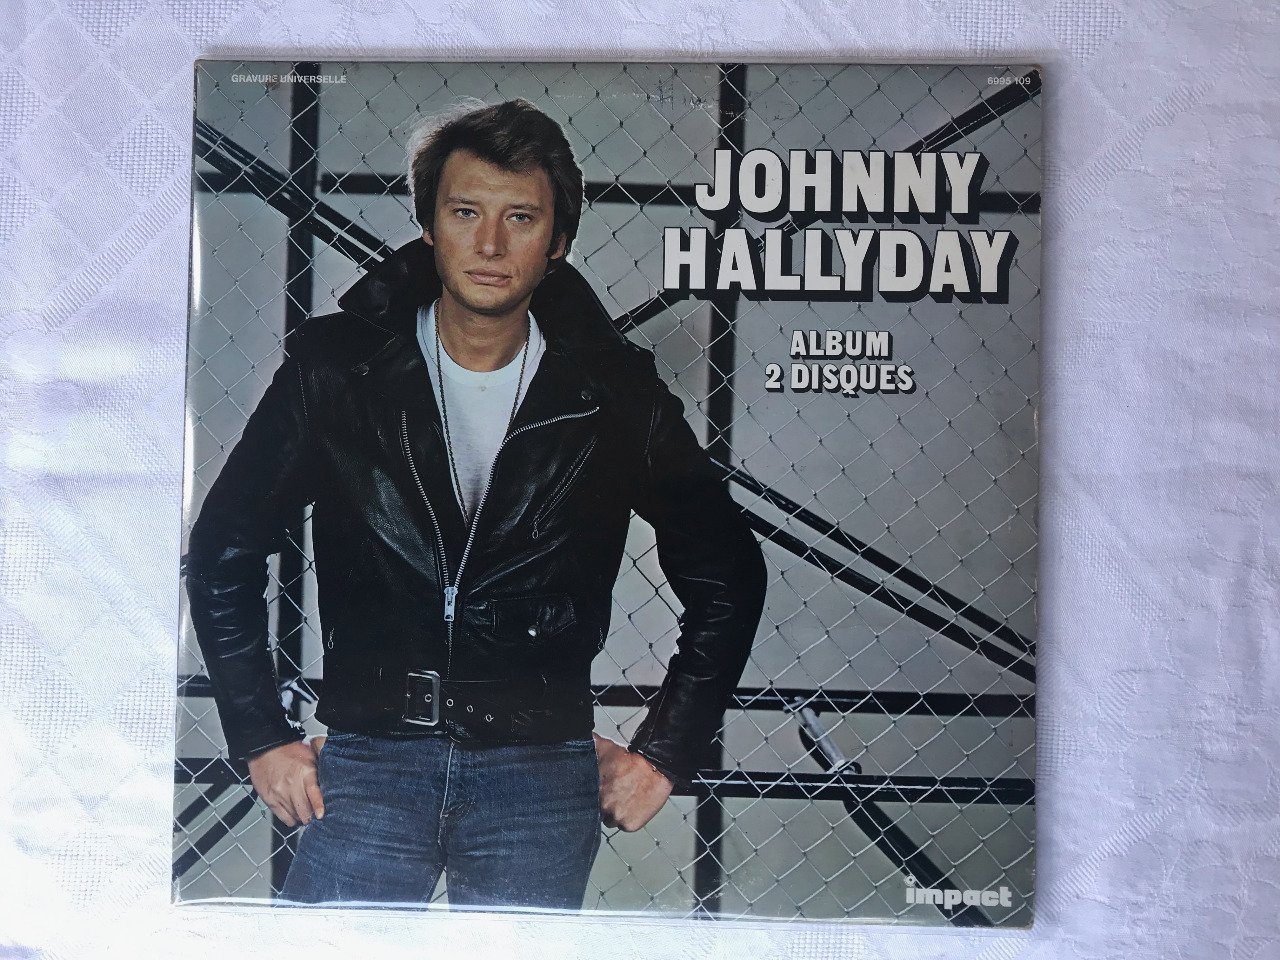 Double disque vinyle johnny hallyday, Réf 6995 109, 1977